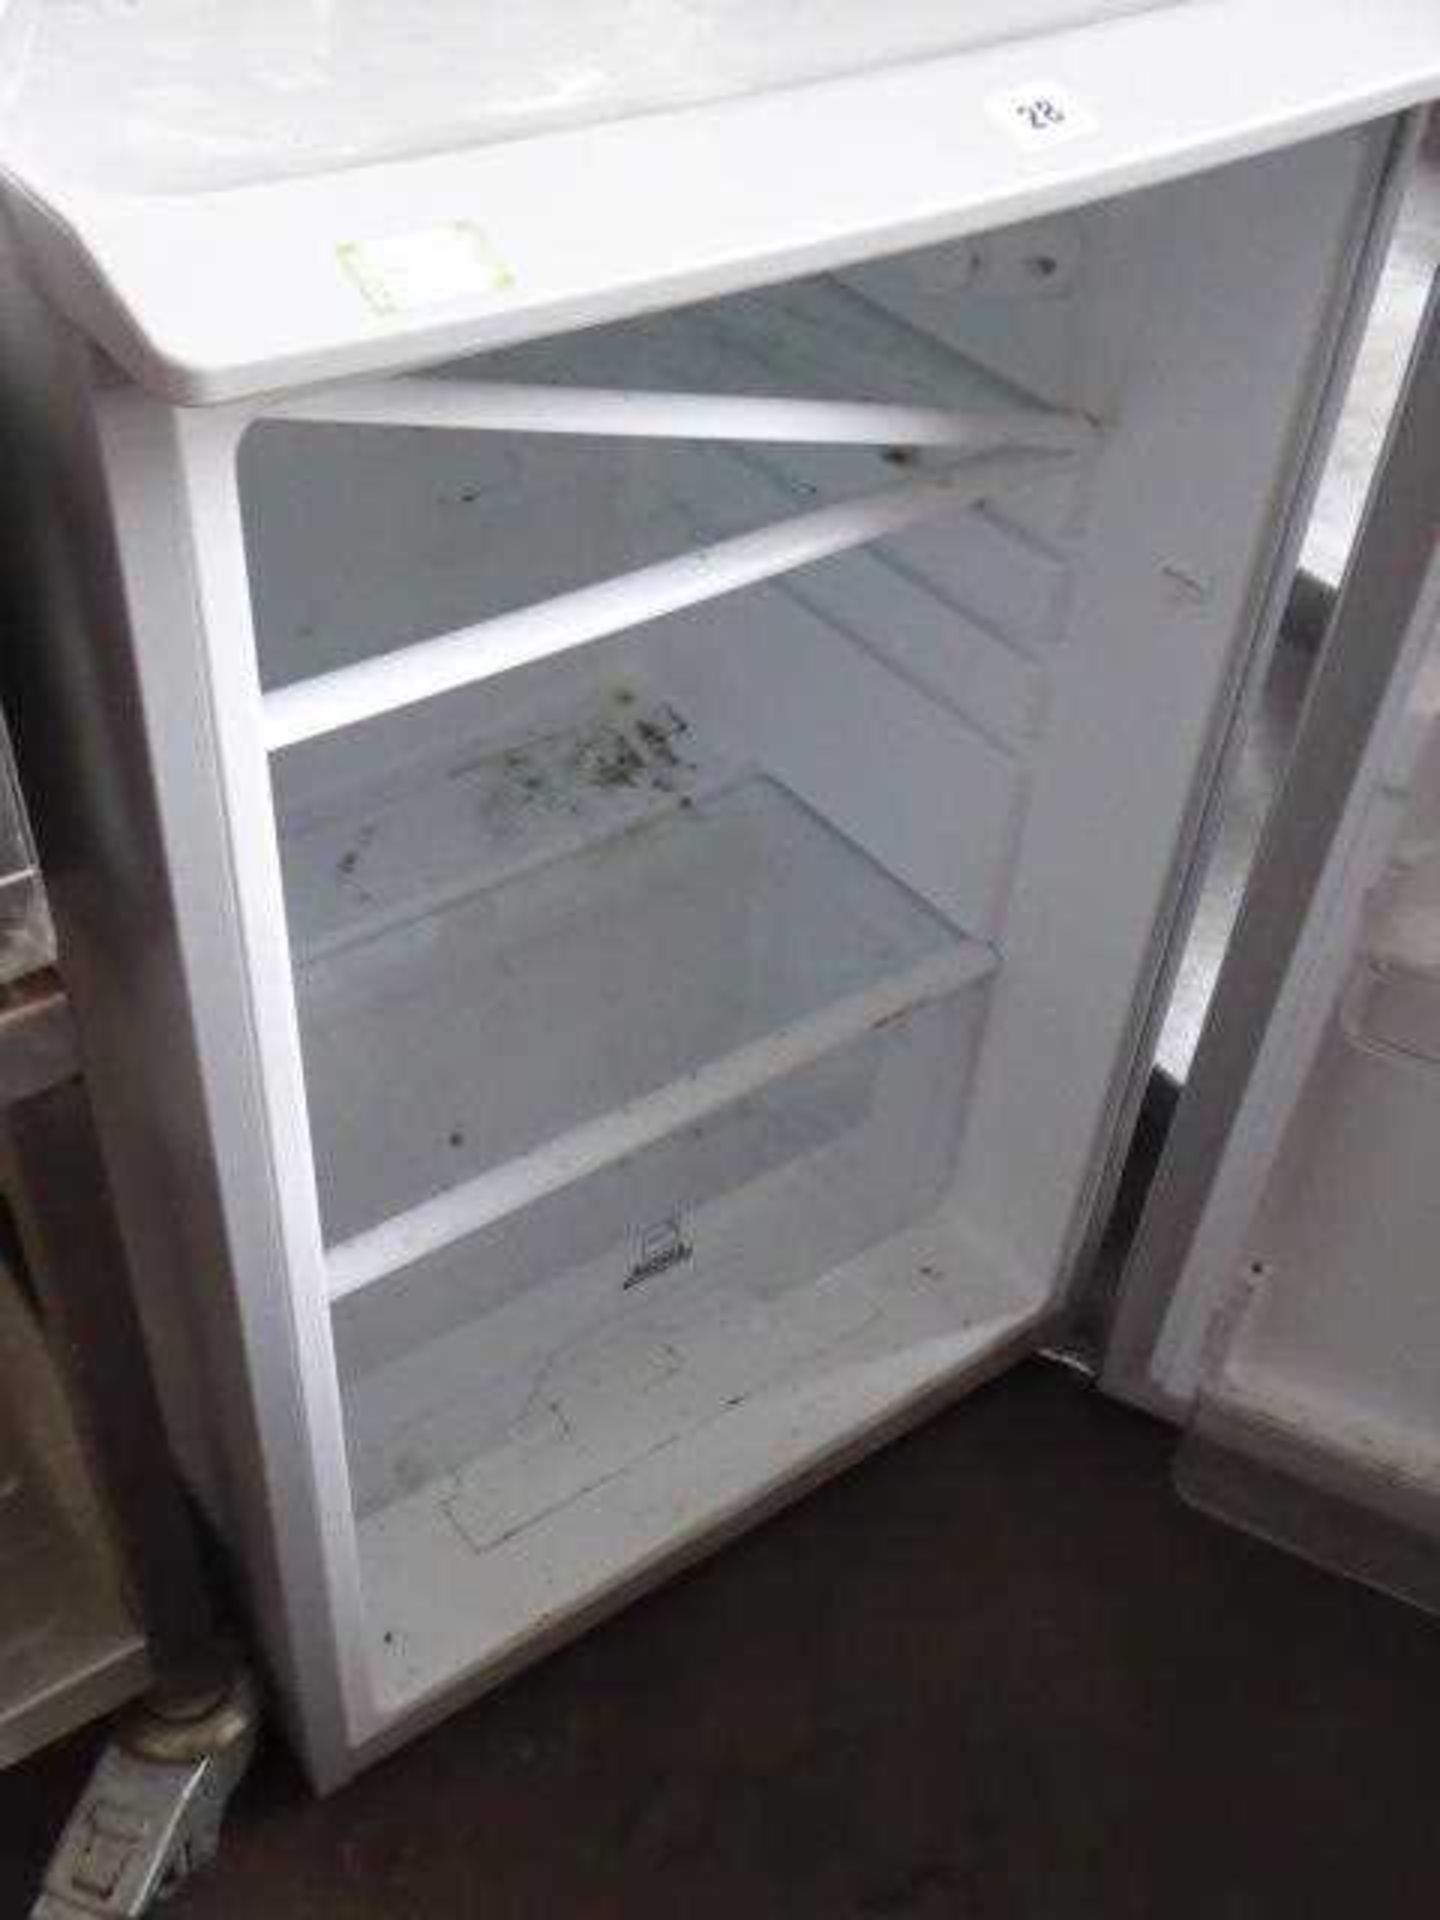 56cm domestic under counter fridge - Image 2 of 3